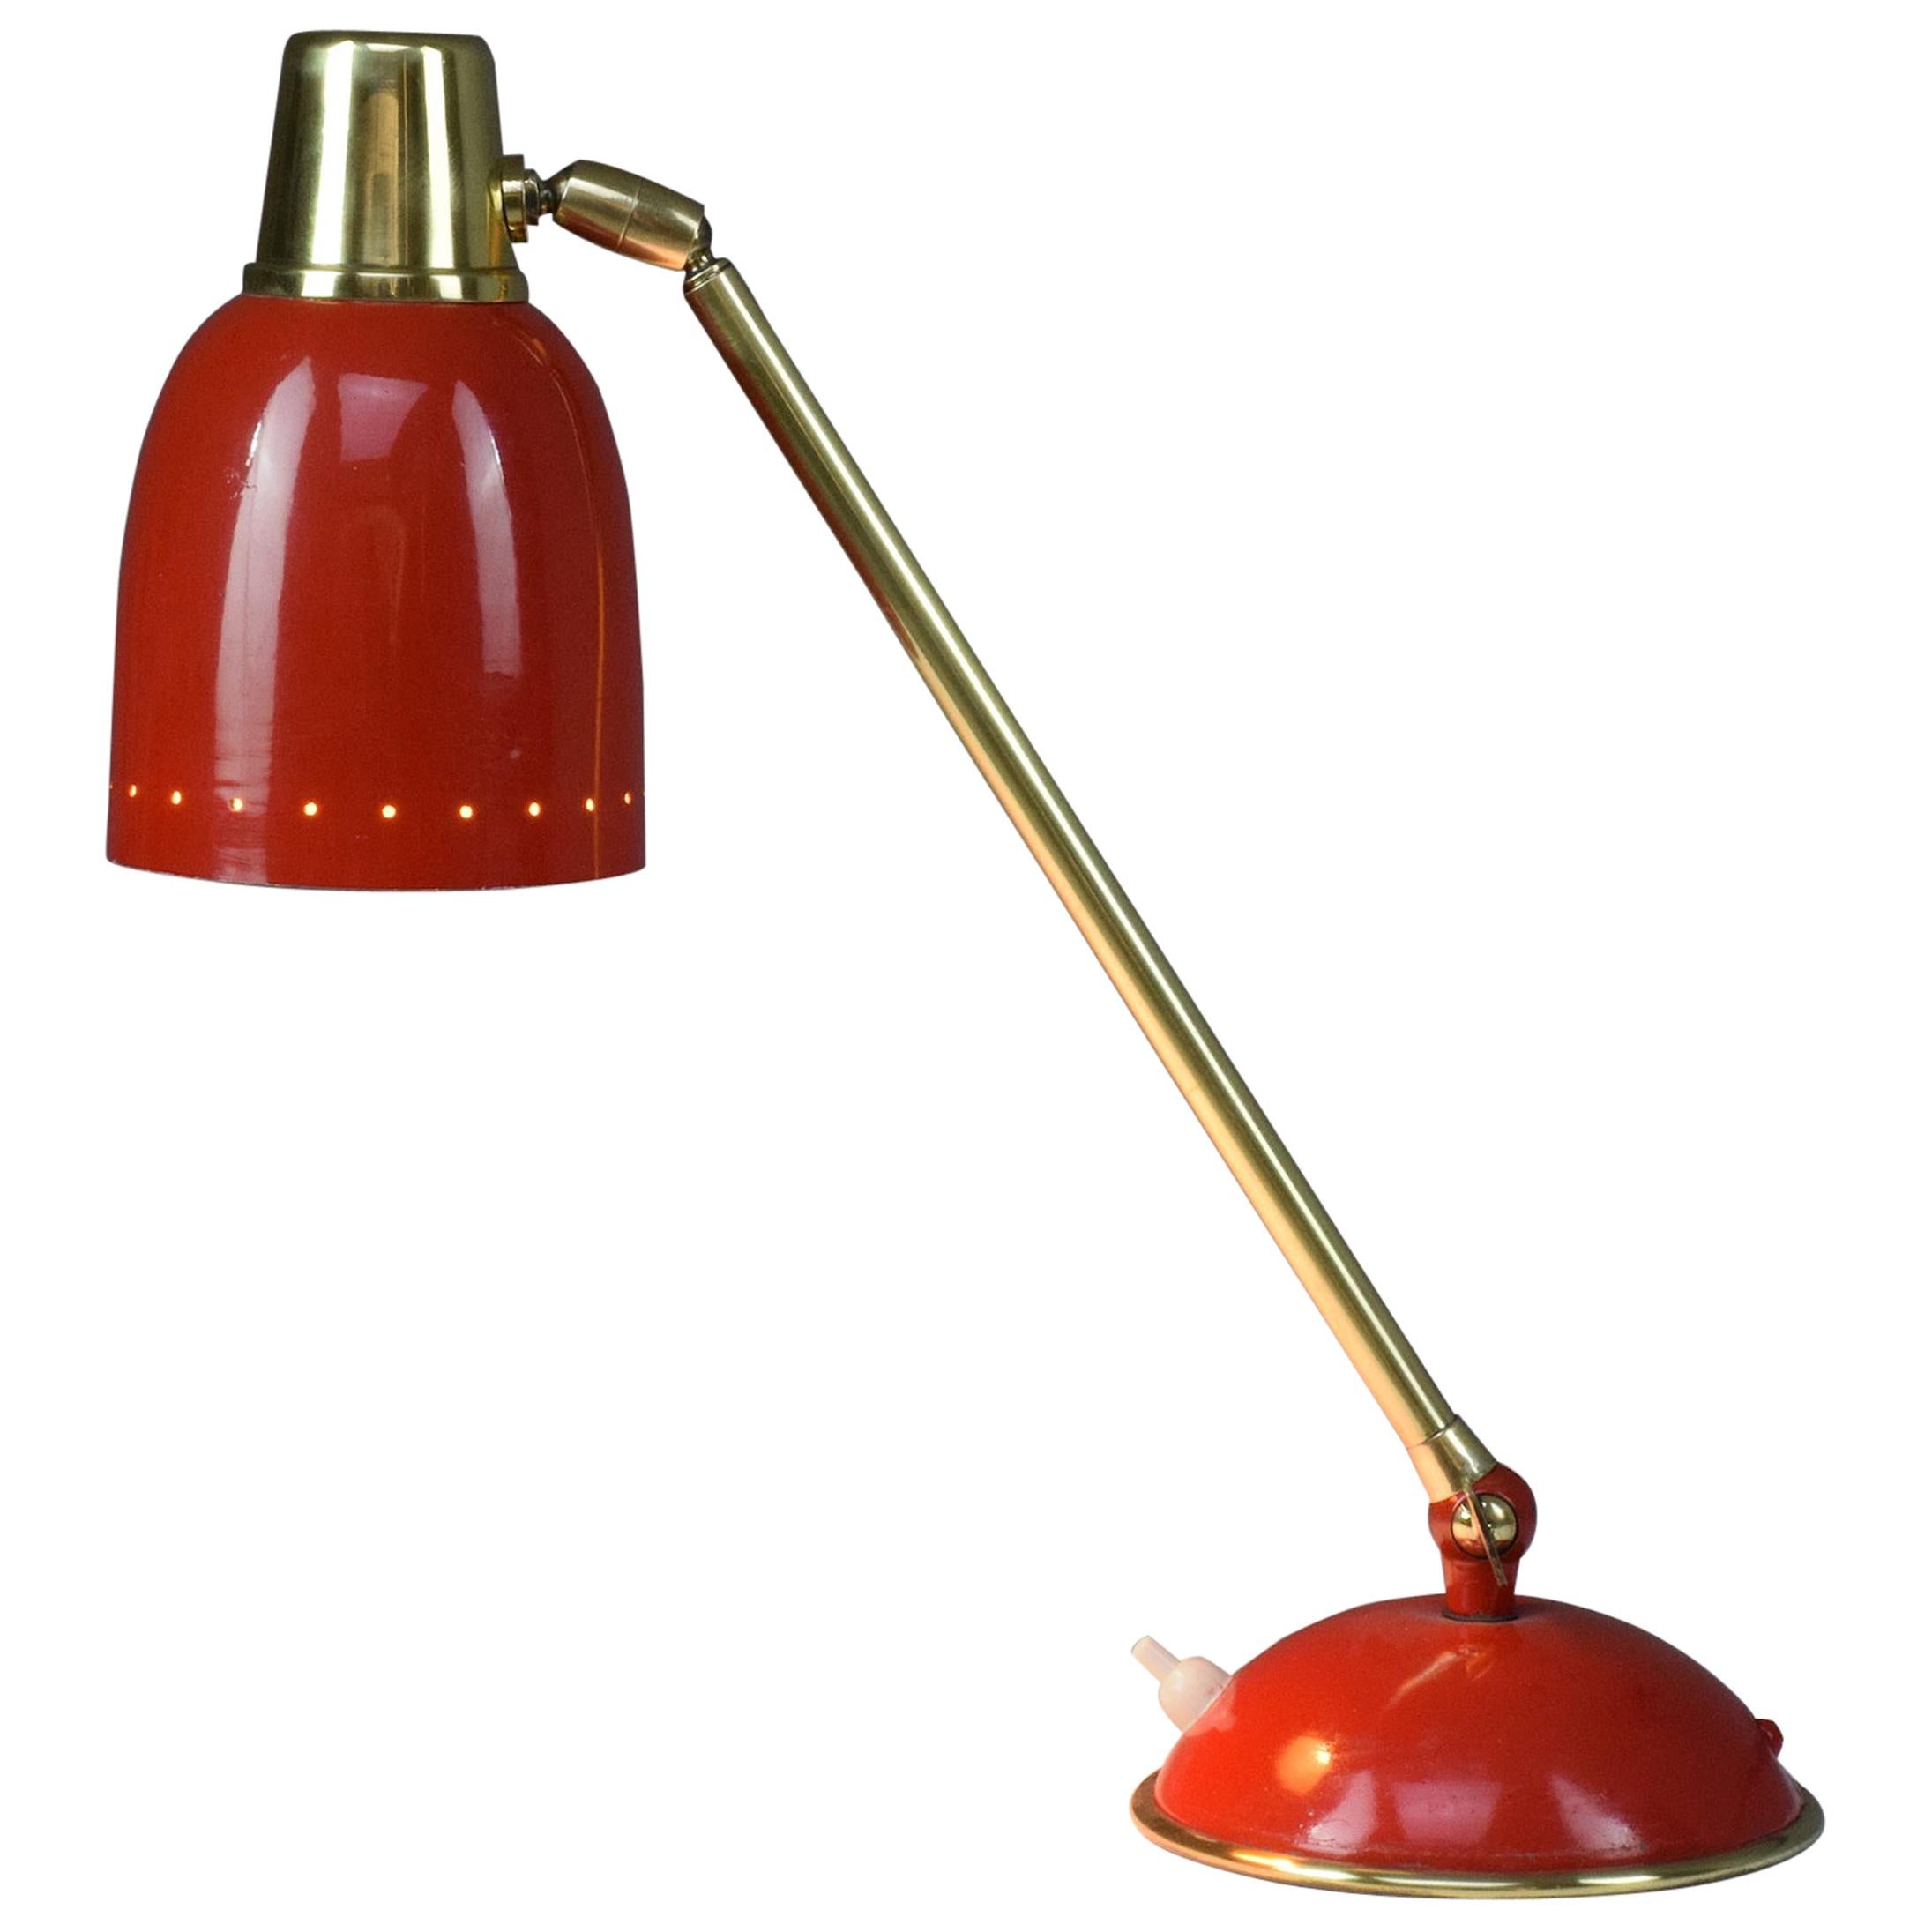 Italian Midcentury Table Lamp in the style of Stilnovo, 1950s